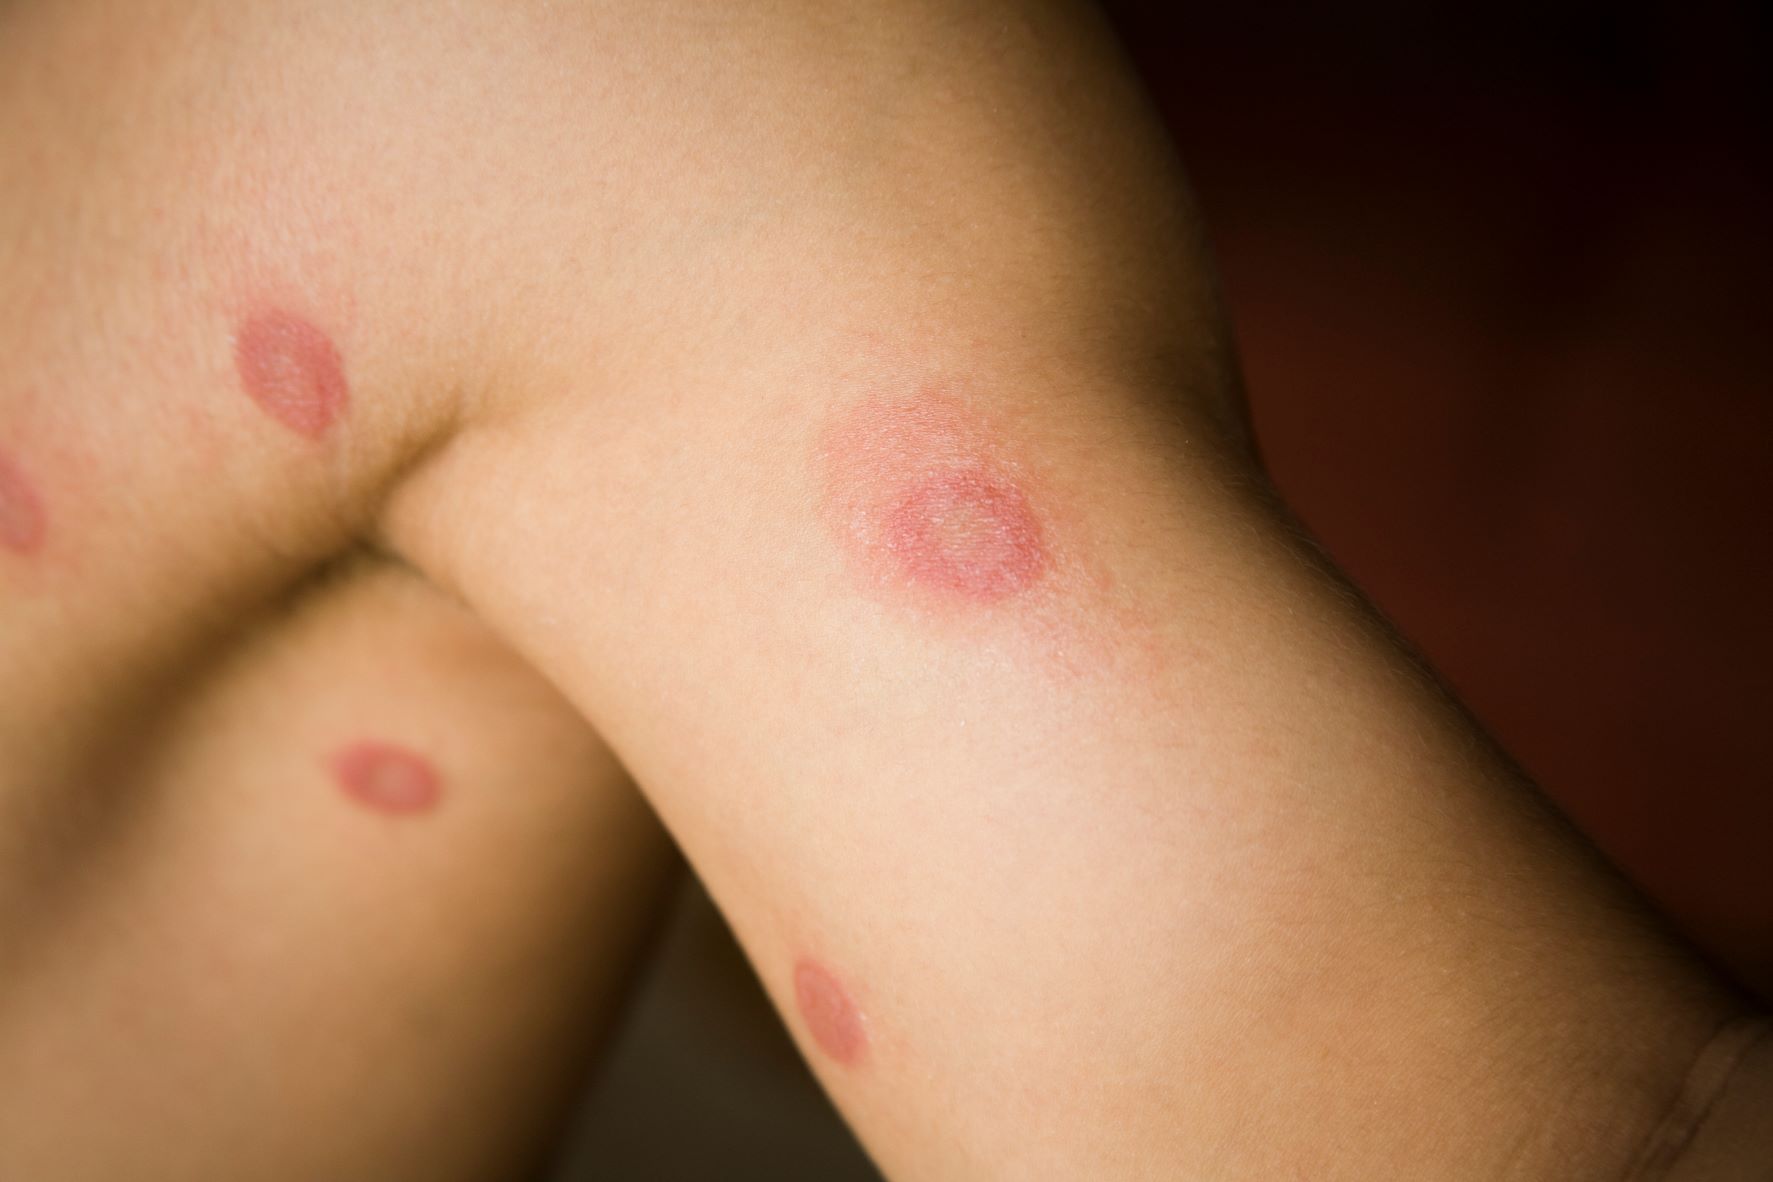 Ringworm rash on human skin